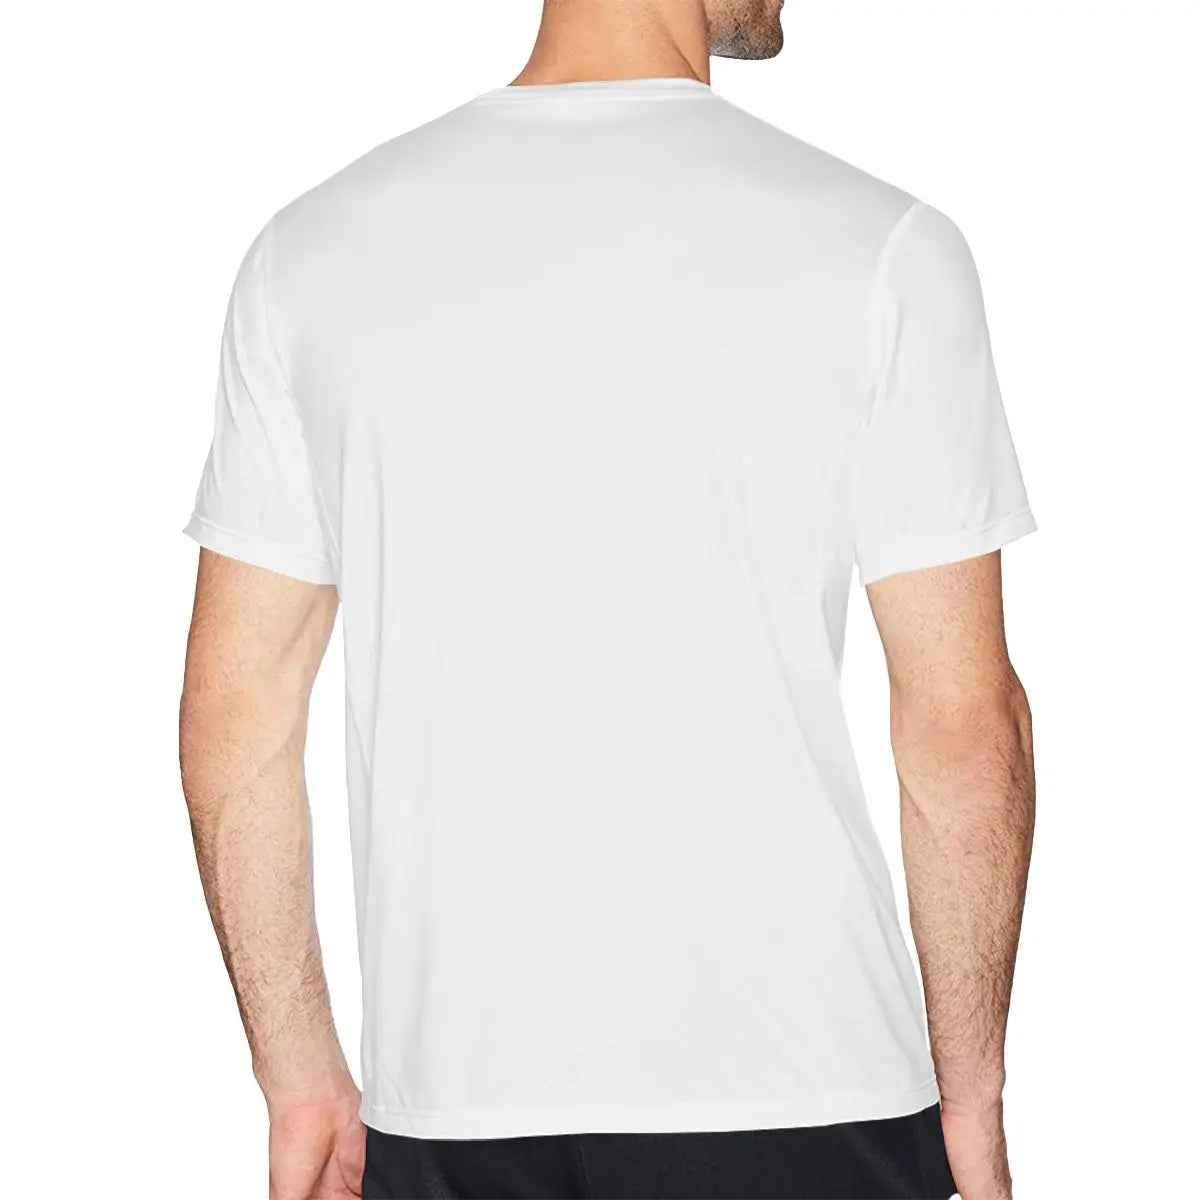 The Beagles Dog Band Beetles Novelty 100% Cotton Tees Crewneck Short Sleeve T Shirt 5XL - Premium t-shirt from Lizard Vigilante - Just $23.99! Shop now at Lizard Vigilante